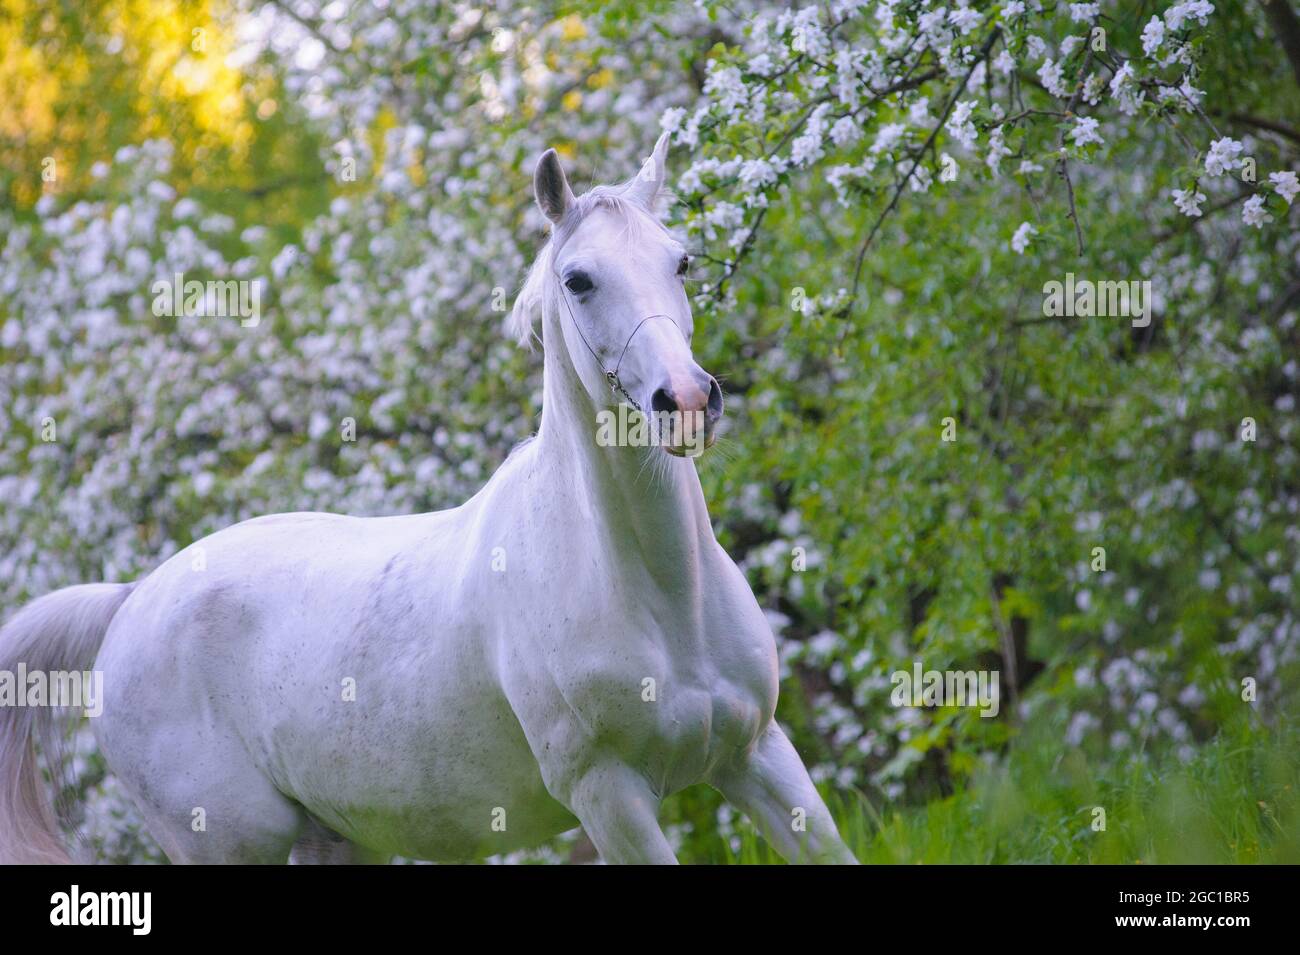 Beautiful white horse running in apple garden in may Stock Photo